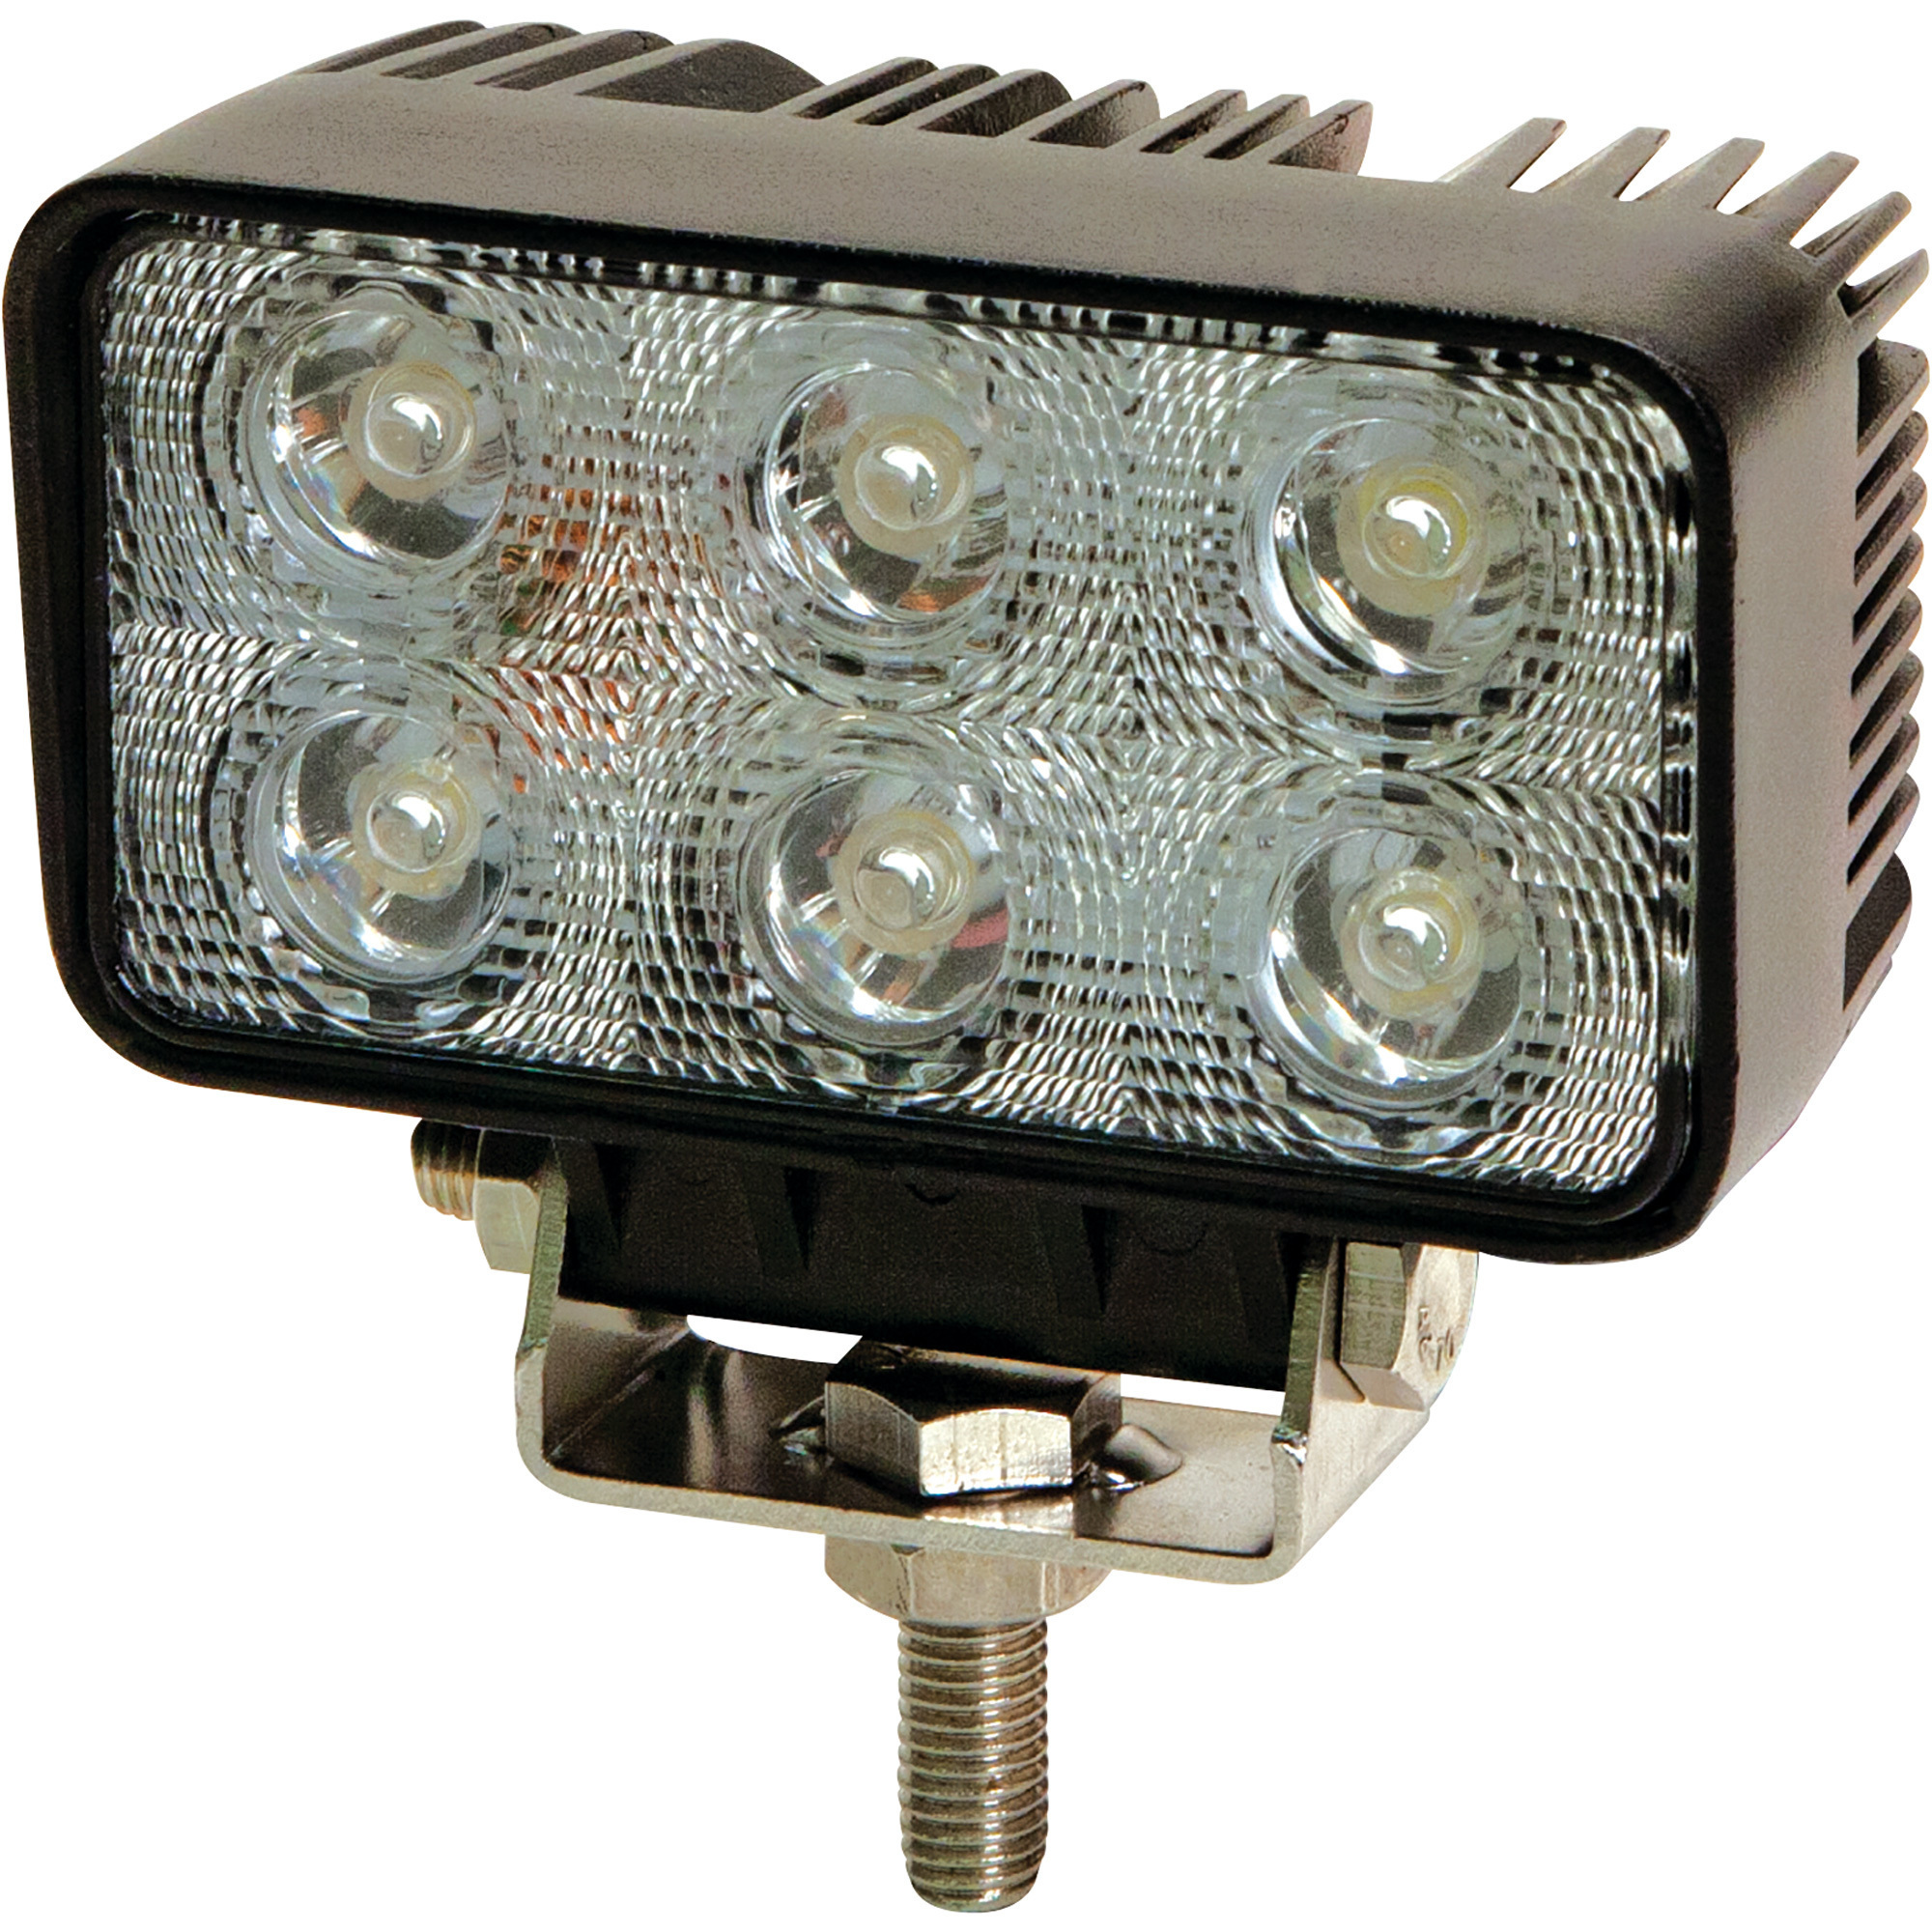 ECCO LED Rectangular Work Light â 12/24V, 1000 Lumens, 6 LEDs, Model EW2411